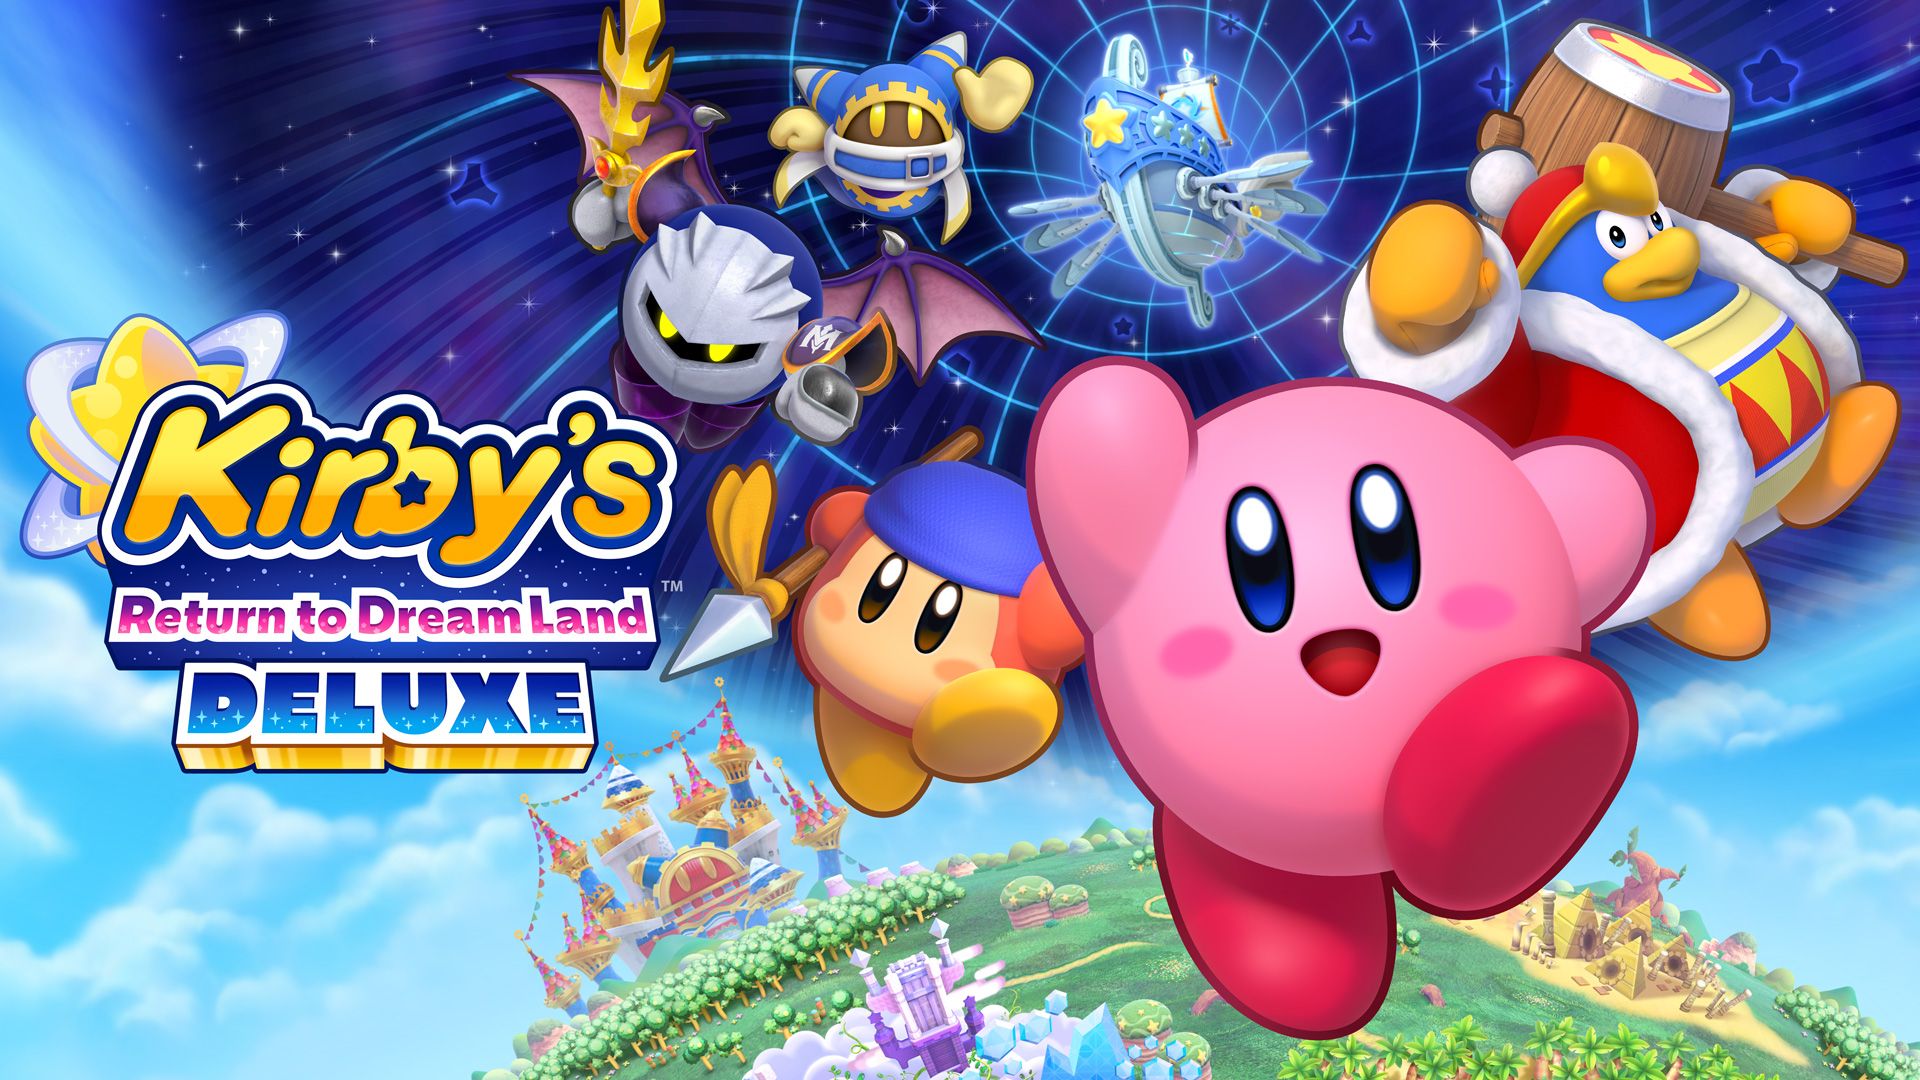 Kirby's Return to Dream Land Deluxe - Key Art